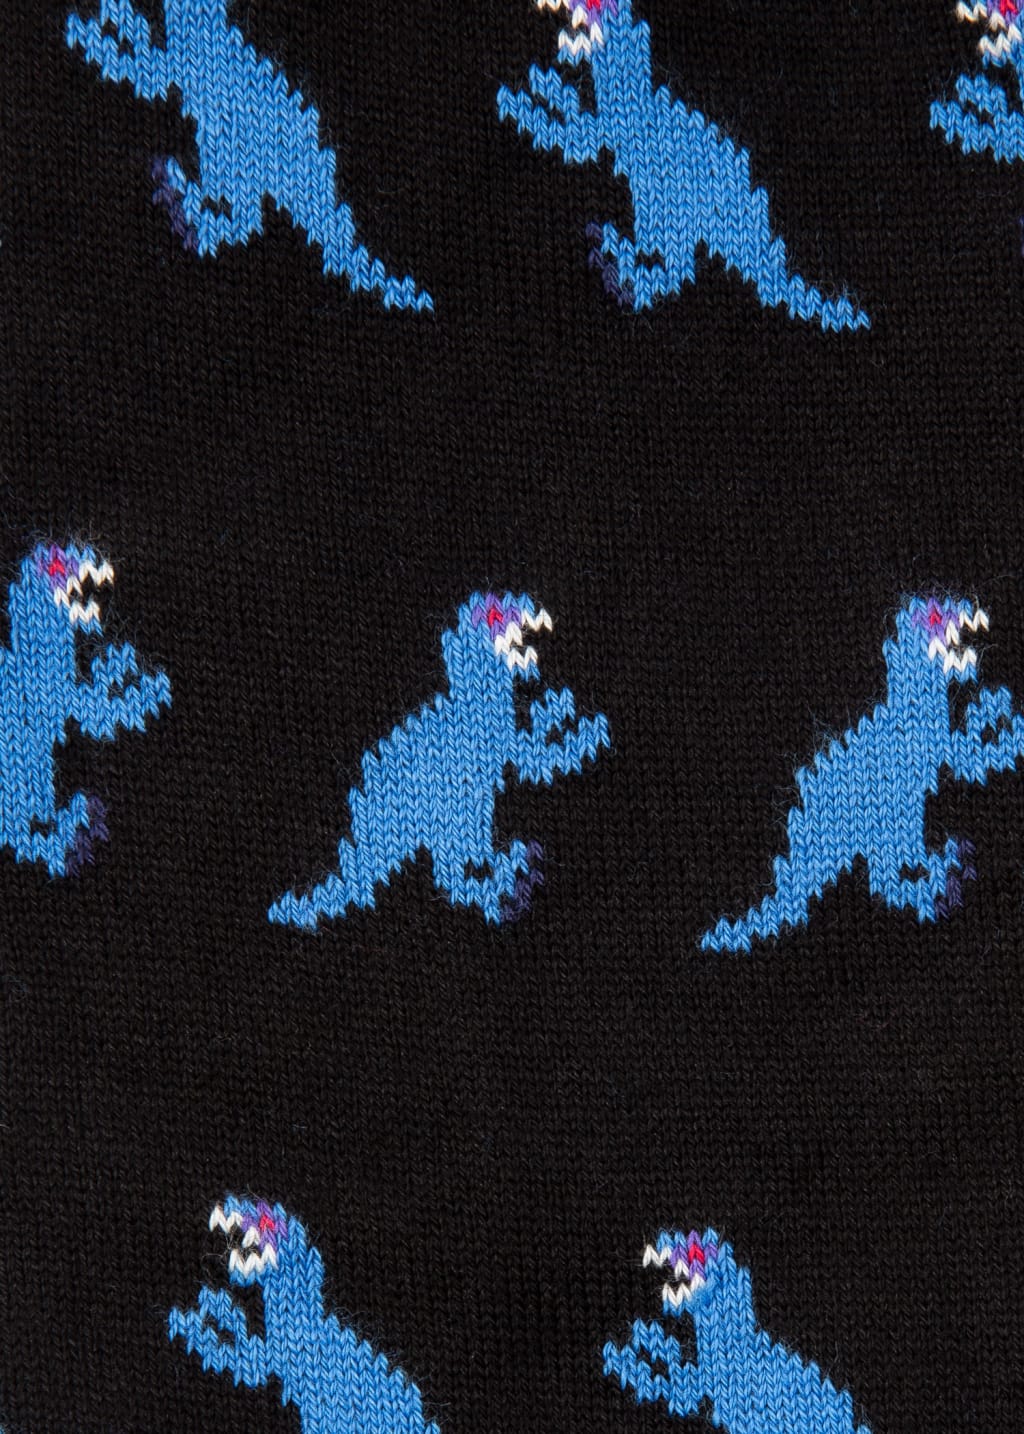 Detail View - Multi-Coloured 'Dino' Socks Three Pack Paul Smith